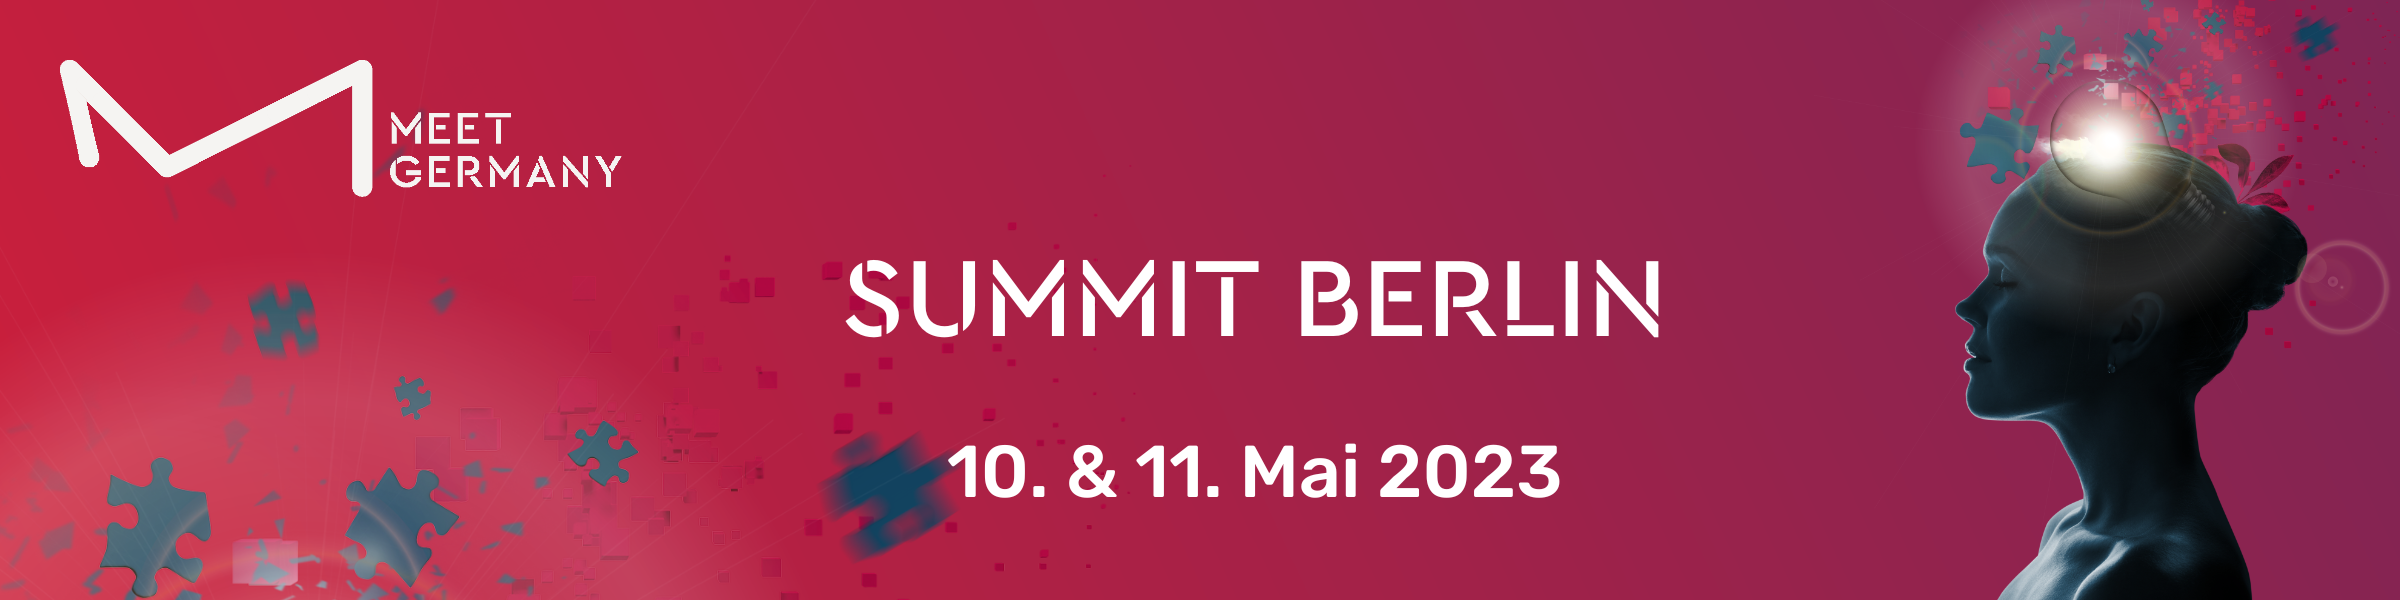 Header image for MEET GERMANY SUMMIT Berlin 2023